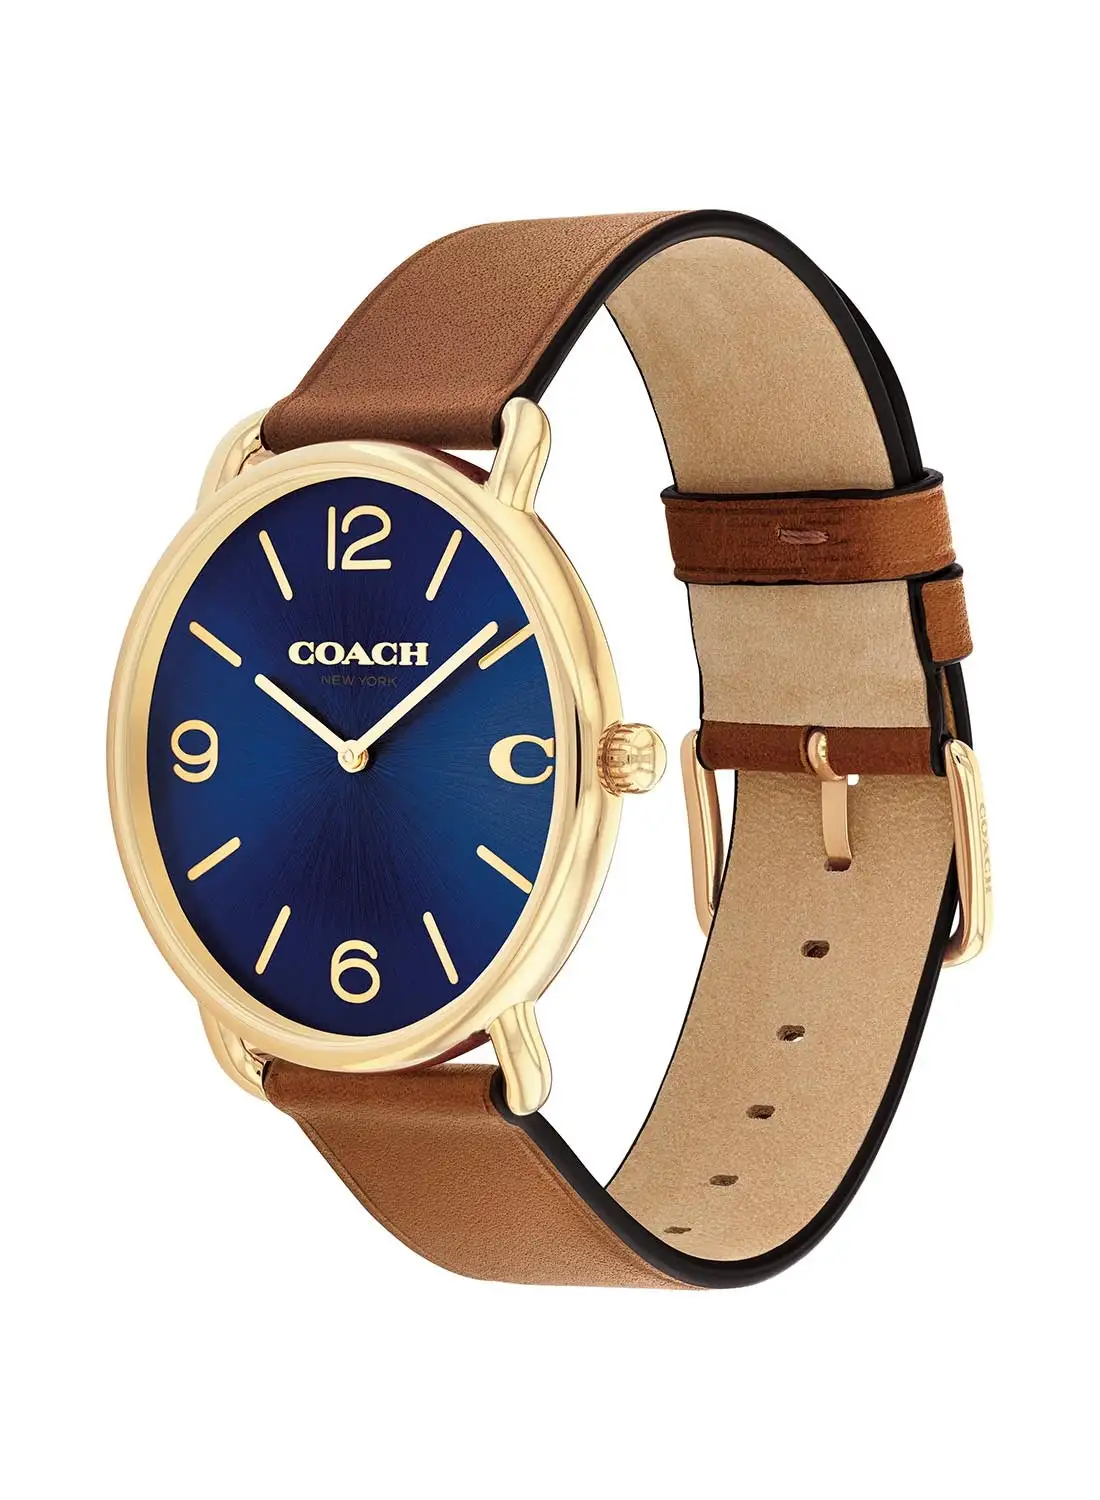 COACH Men's Analog Round Shape Leather Wrist Watch 14602644 - 41 Mm